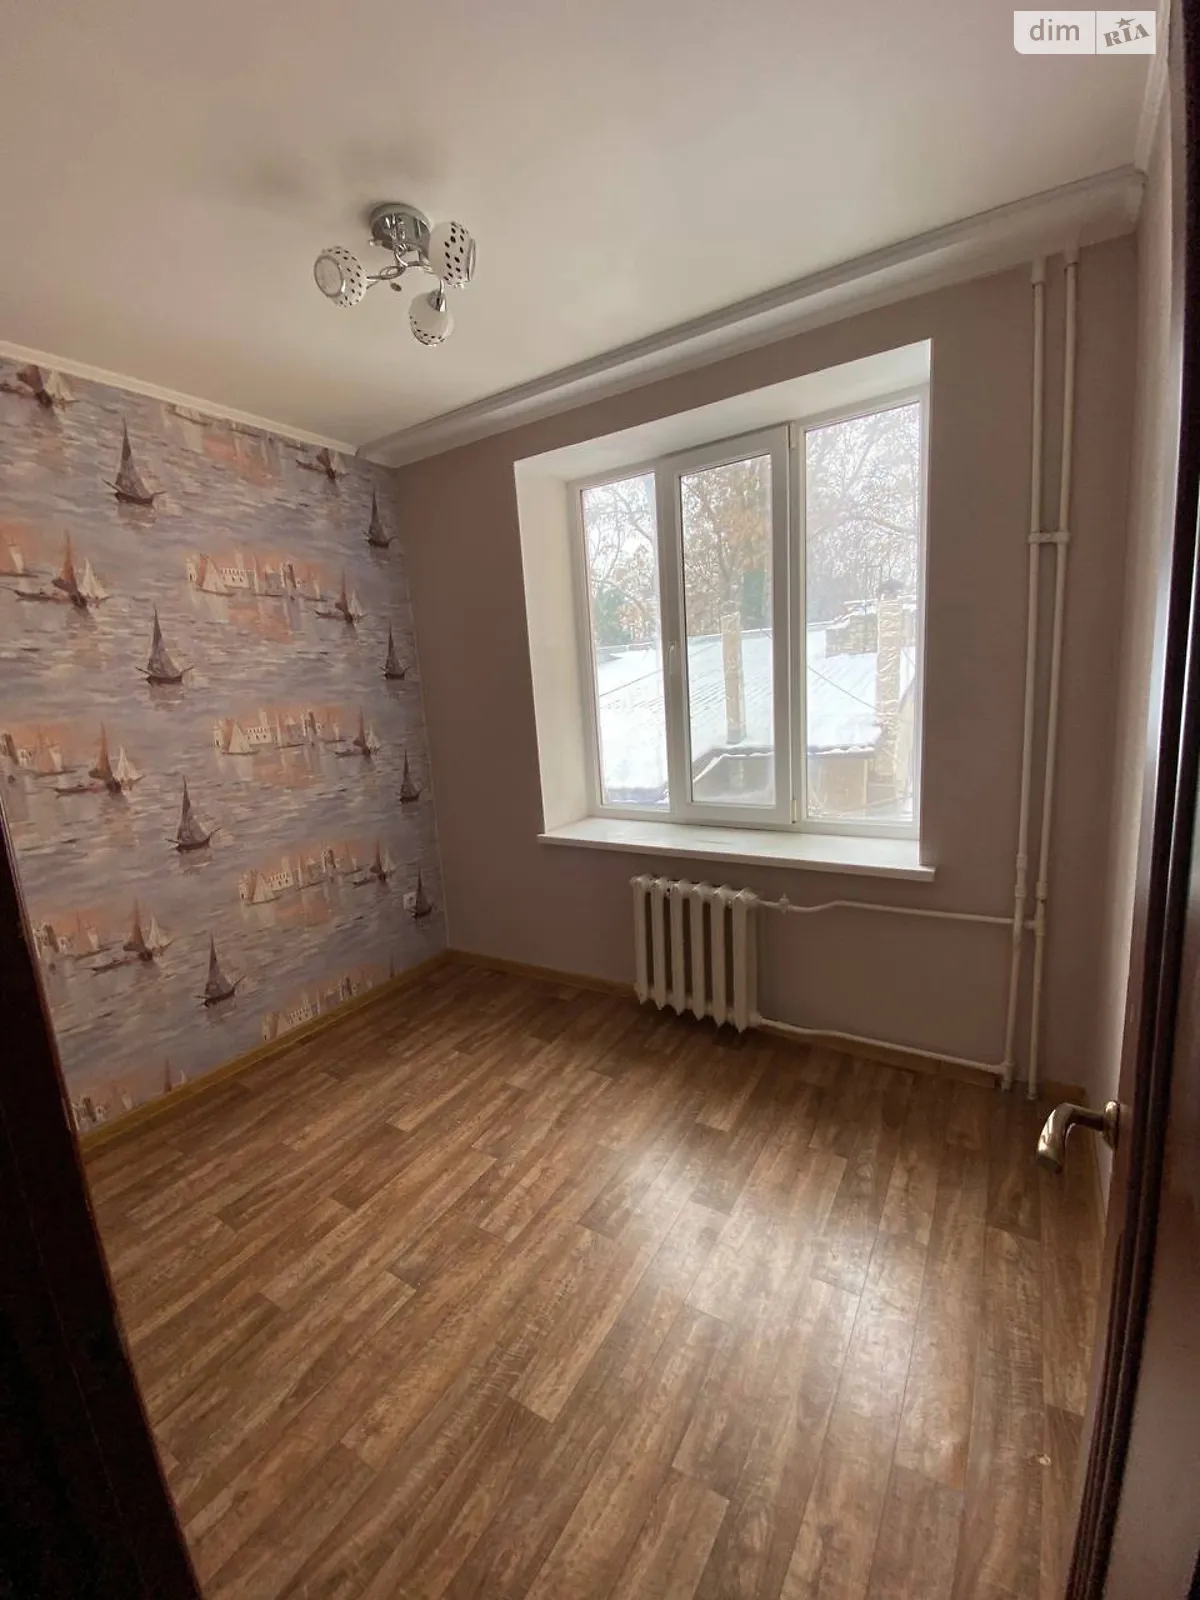 Продается комната 14 кв. м в Одессе, цена: 11000 $ - фото 1